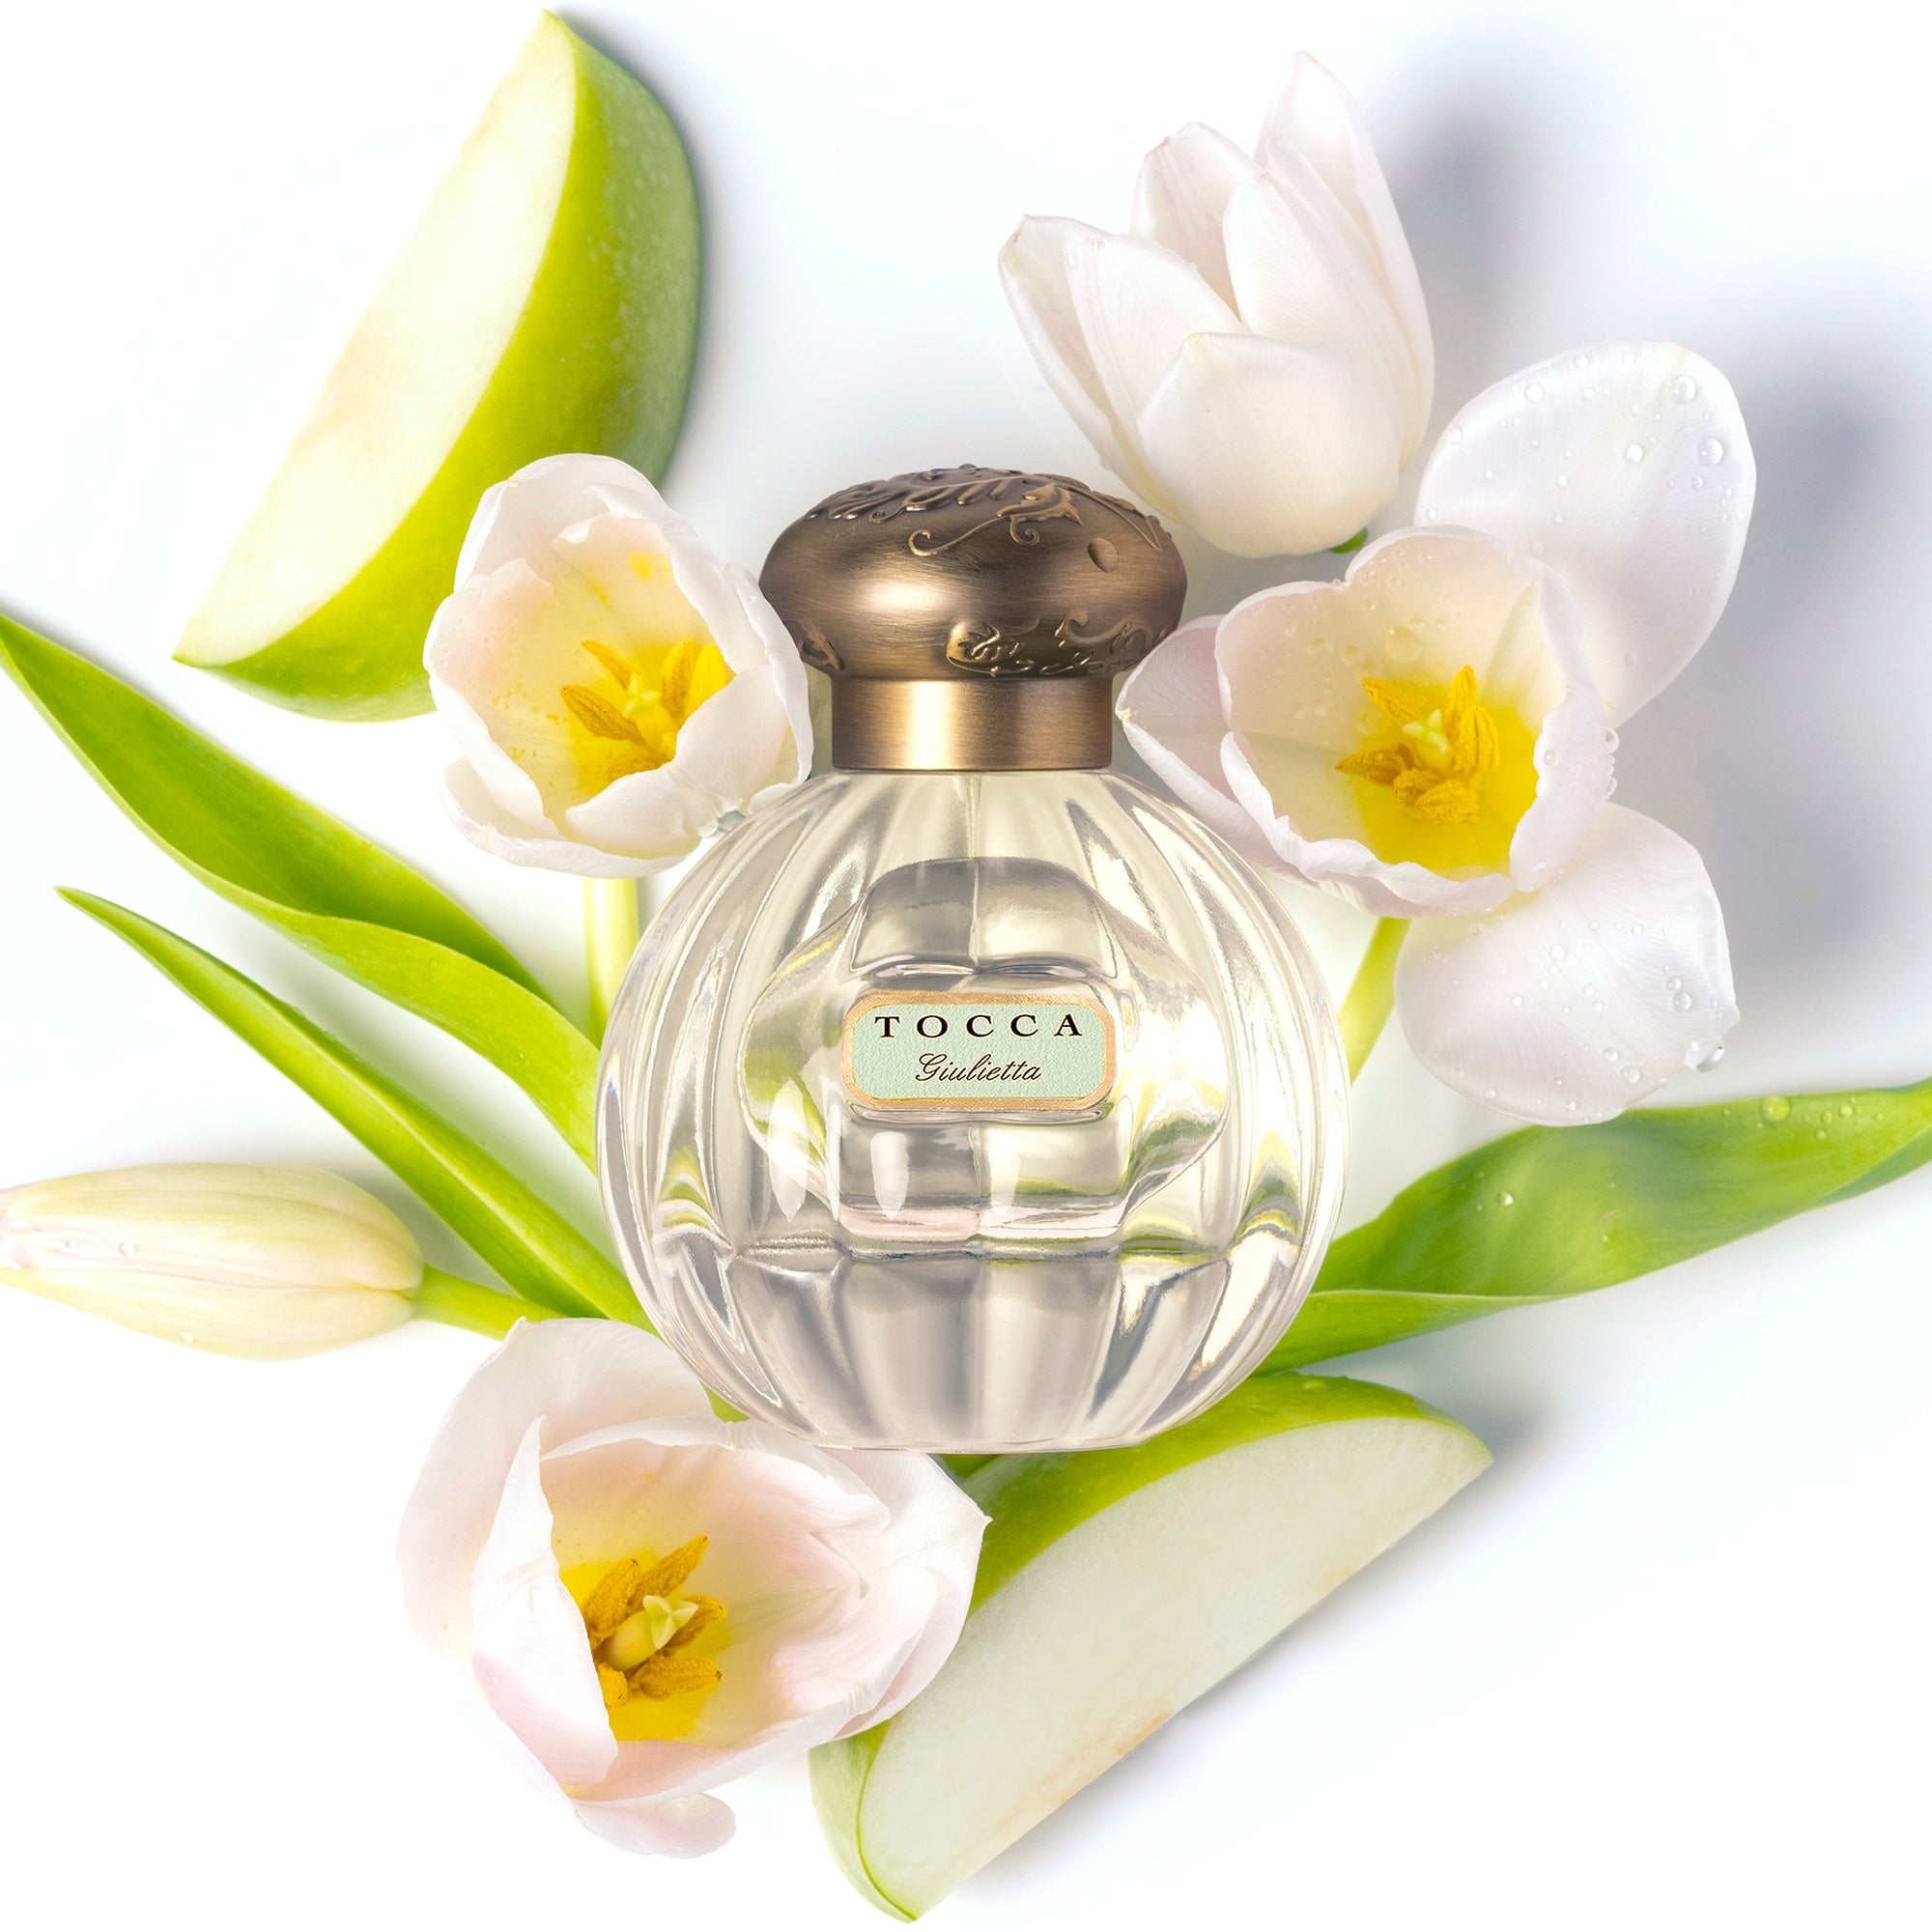 Tocca Fine Fragrances Eau de Parfum Travel Spray Giulietta 20ml